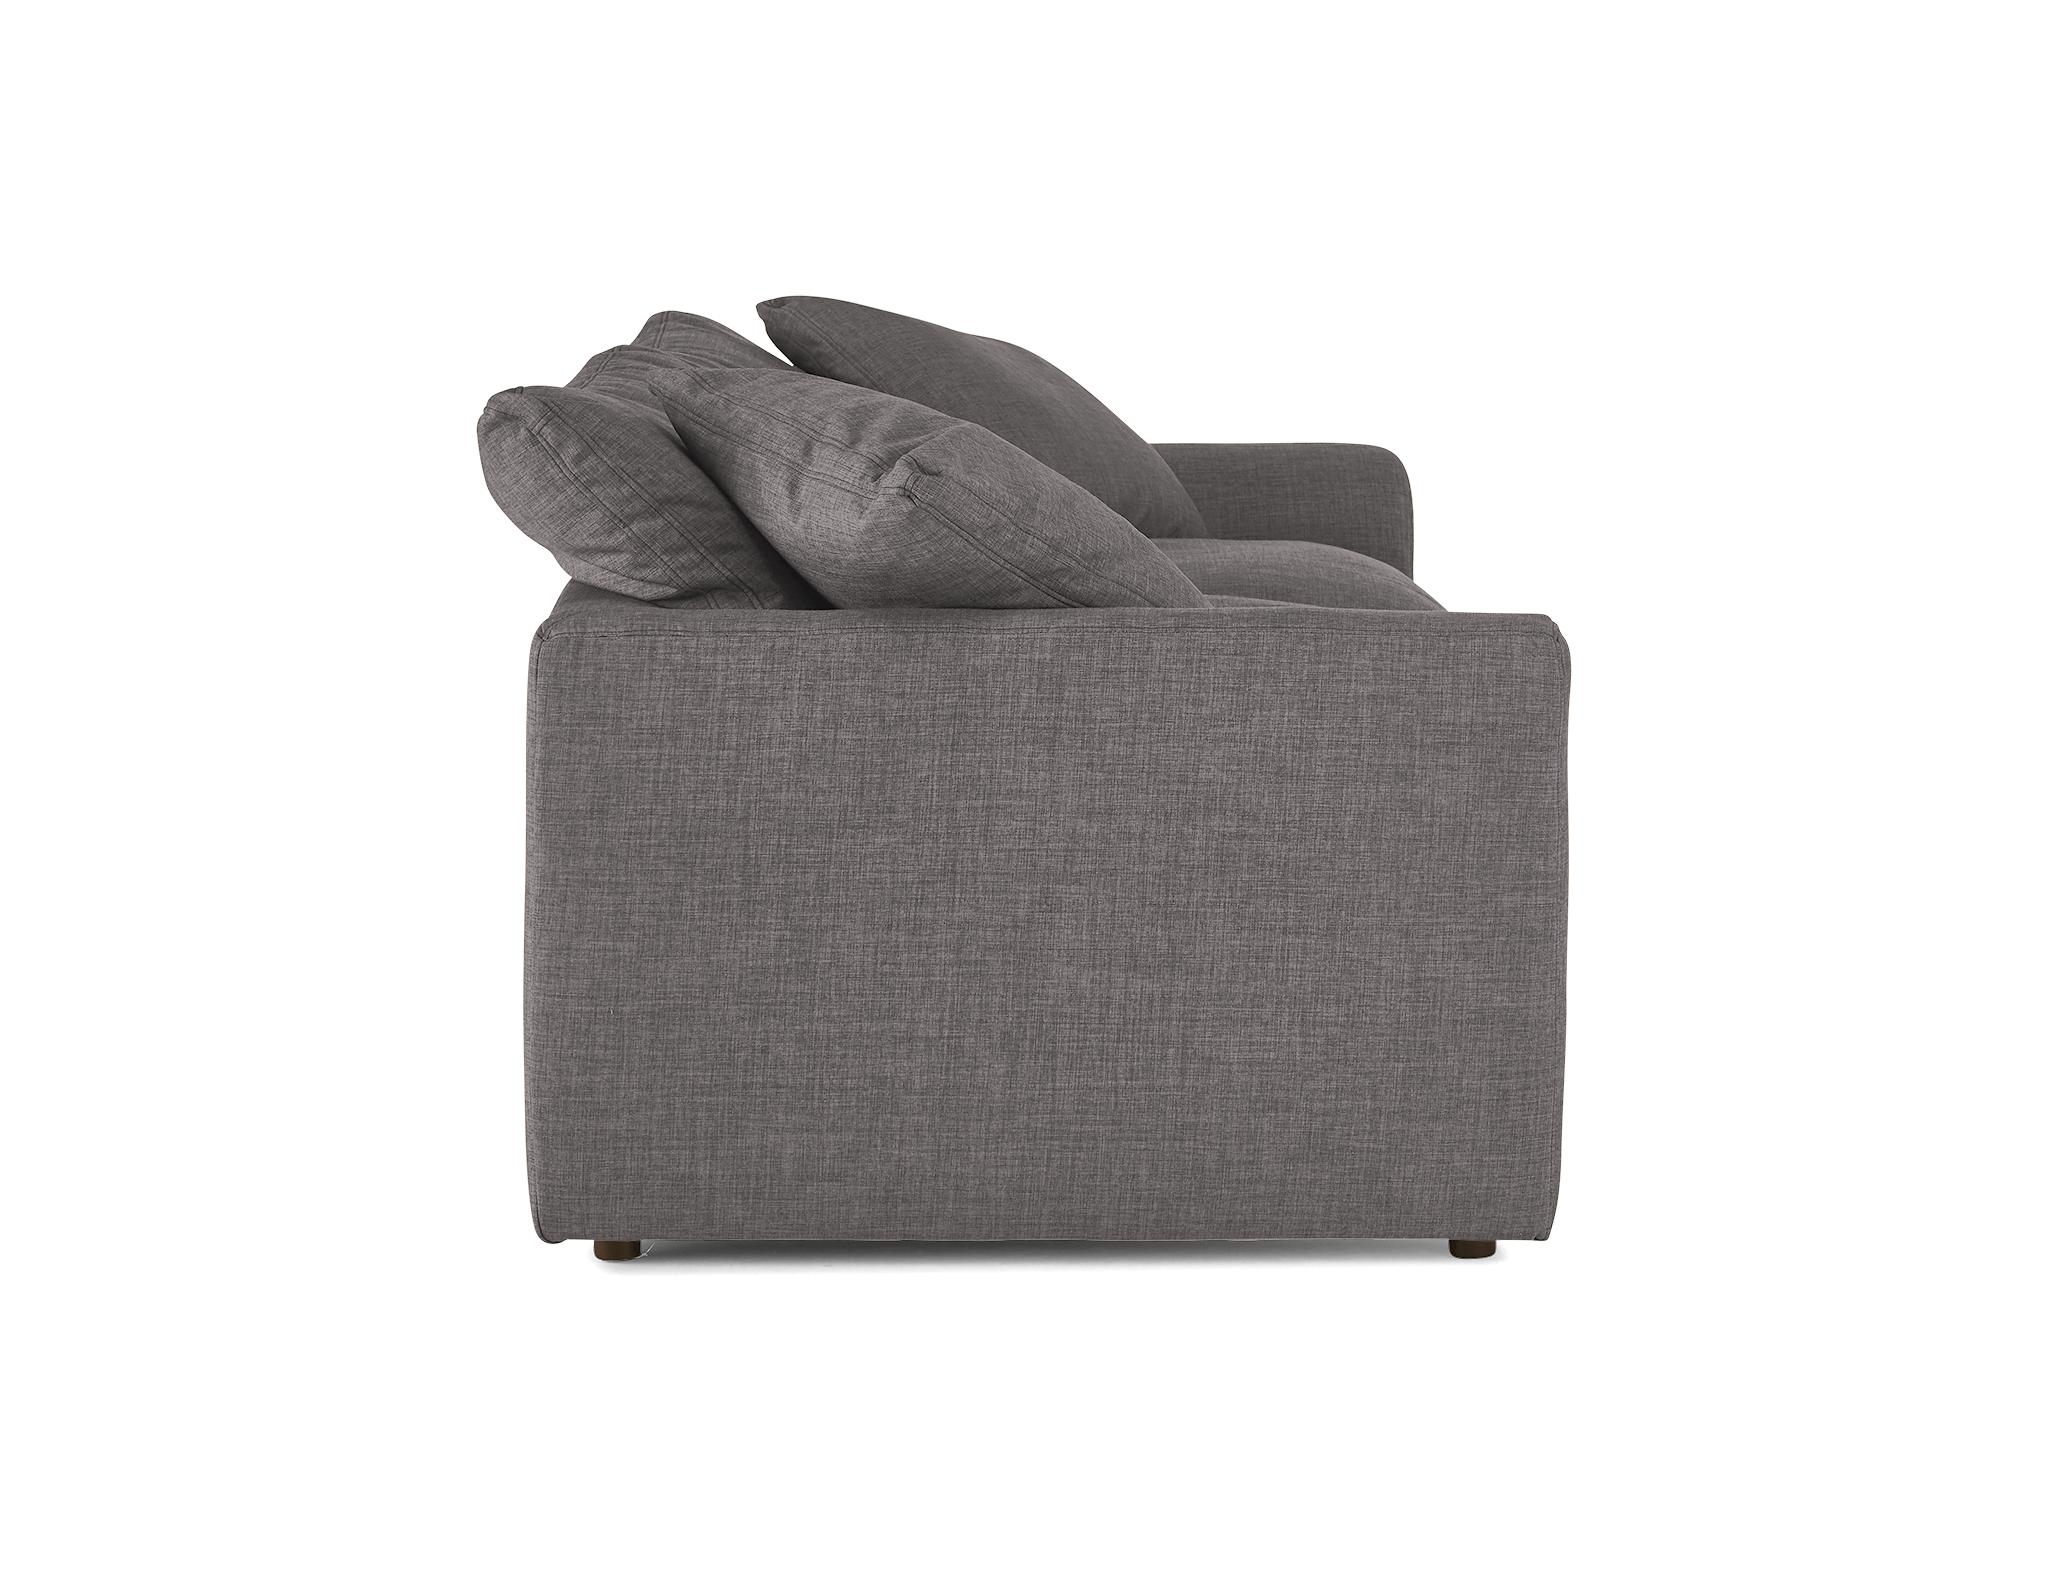 Gray Bryant Mid Century Modern Sofa - Taylor Felt Grey - Image 2